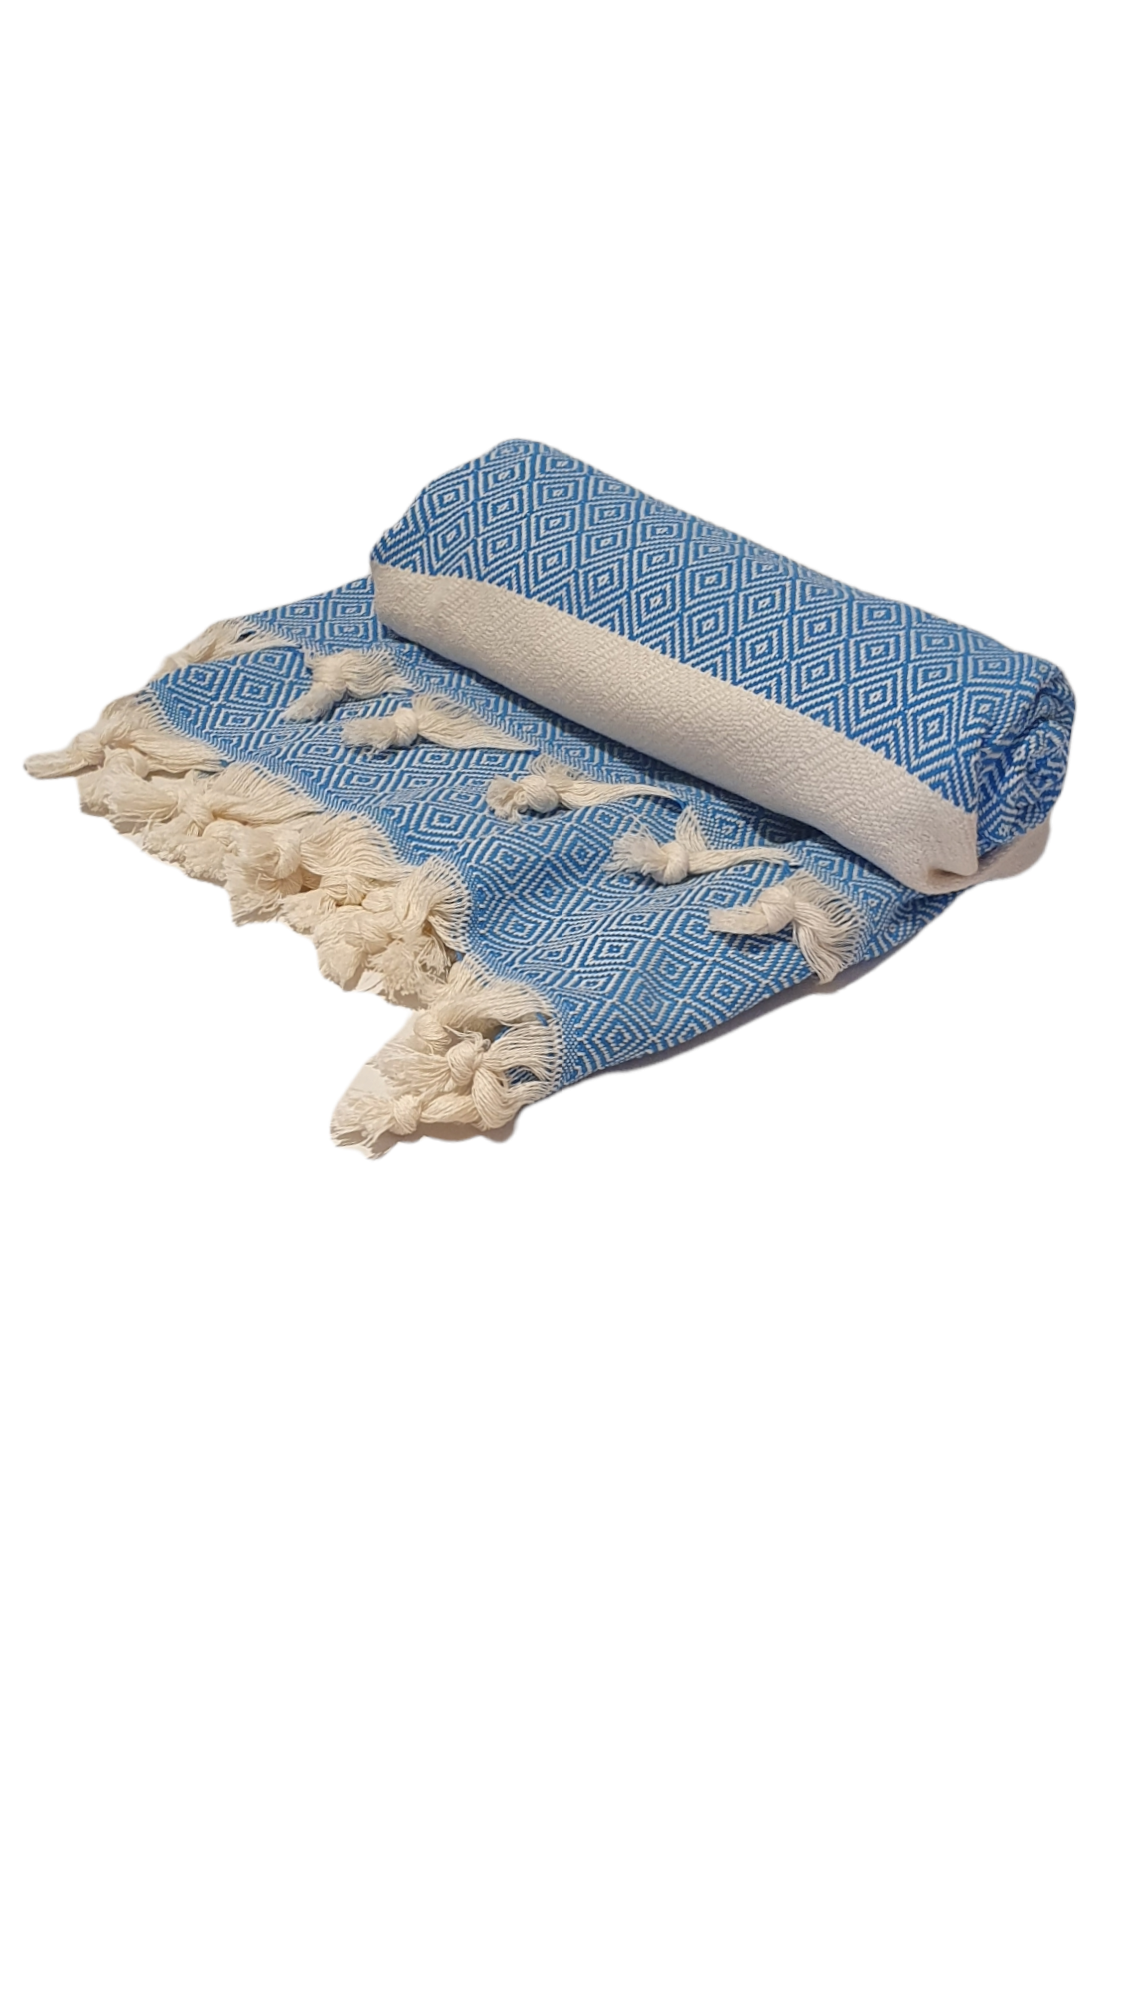 Gold Case Turkish Beach Towel Set of 5-100% Cotton - 71x40 Inches XXL Oversized - Quick Dry Sand Free Turkish Towel - Lightweight Bath Towels